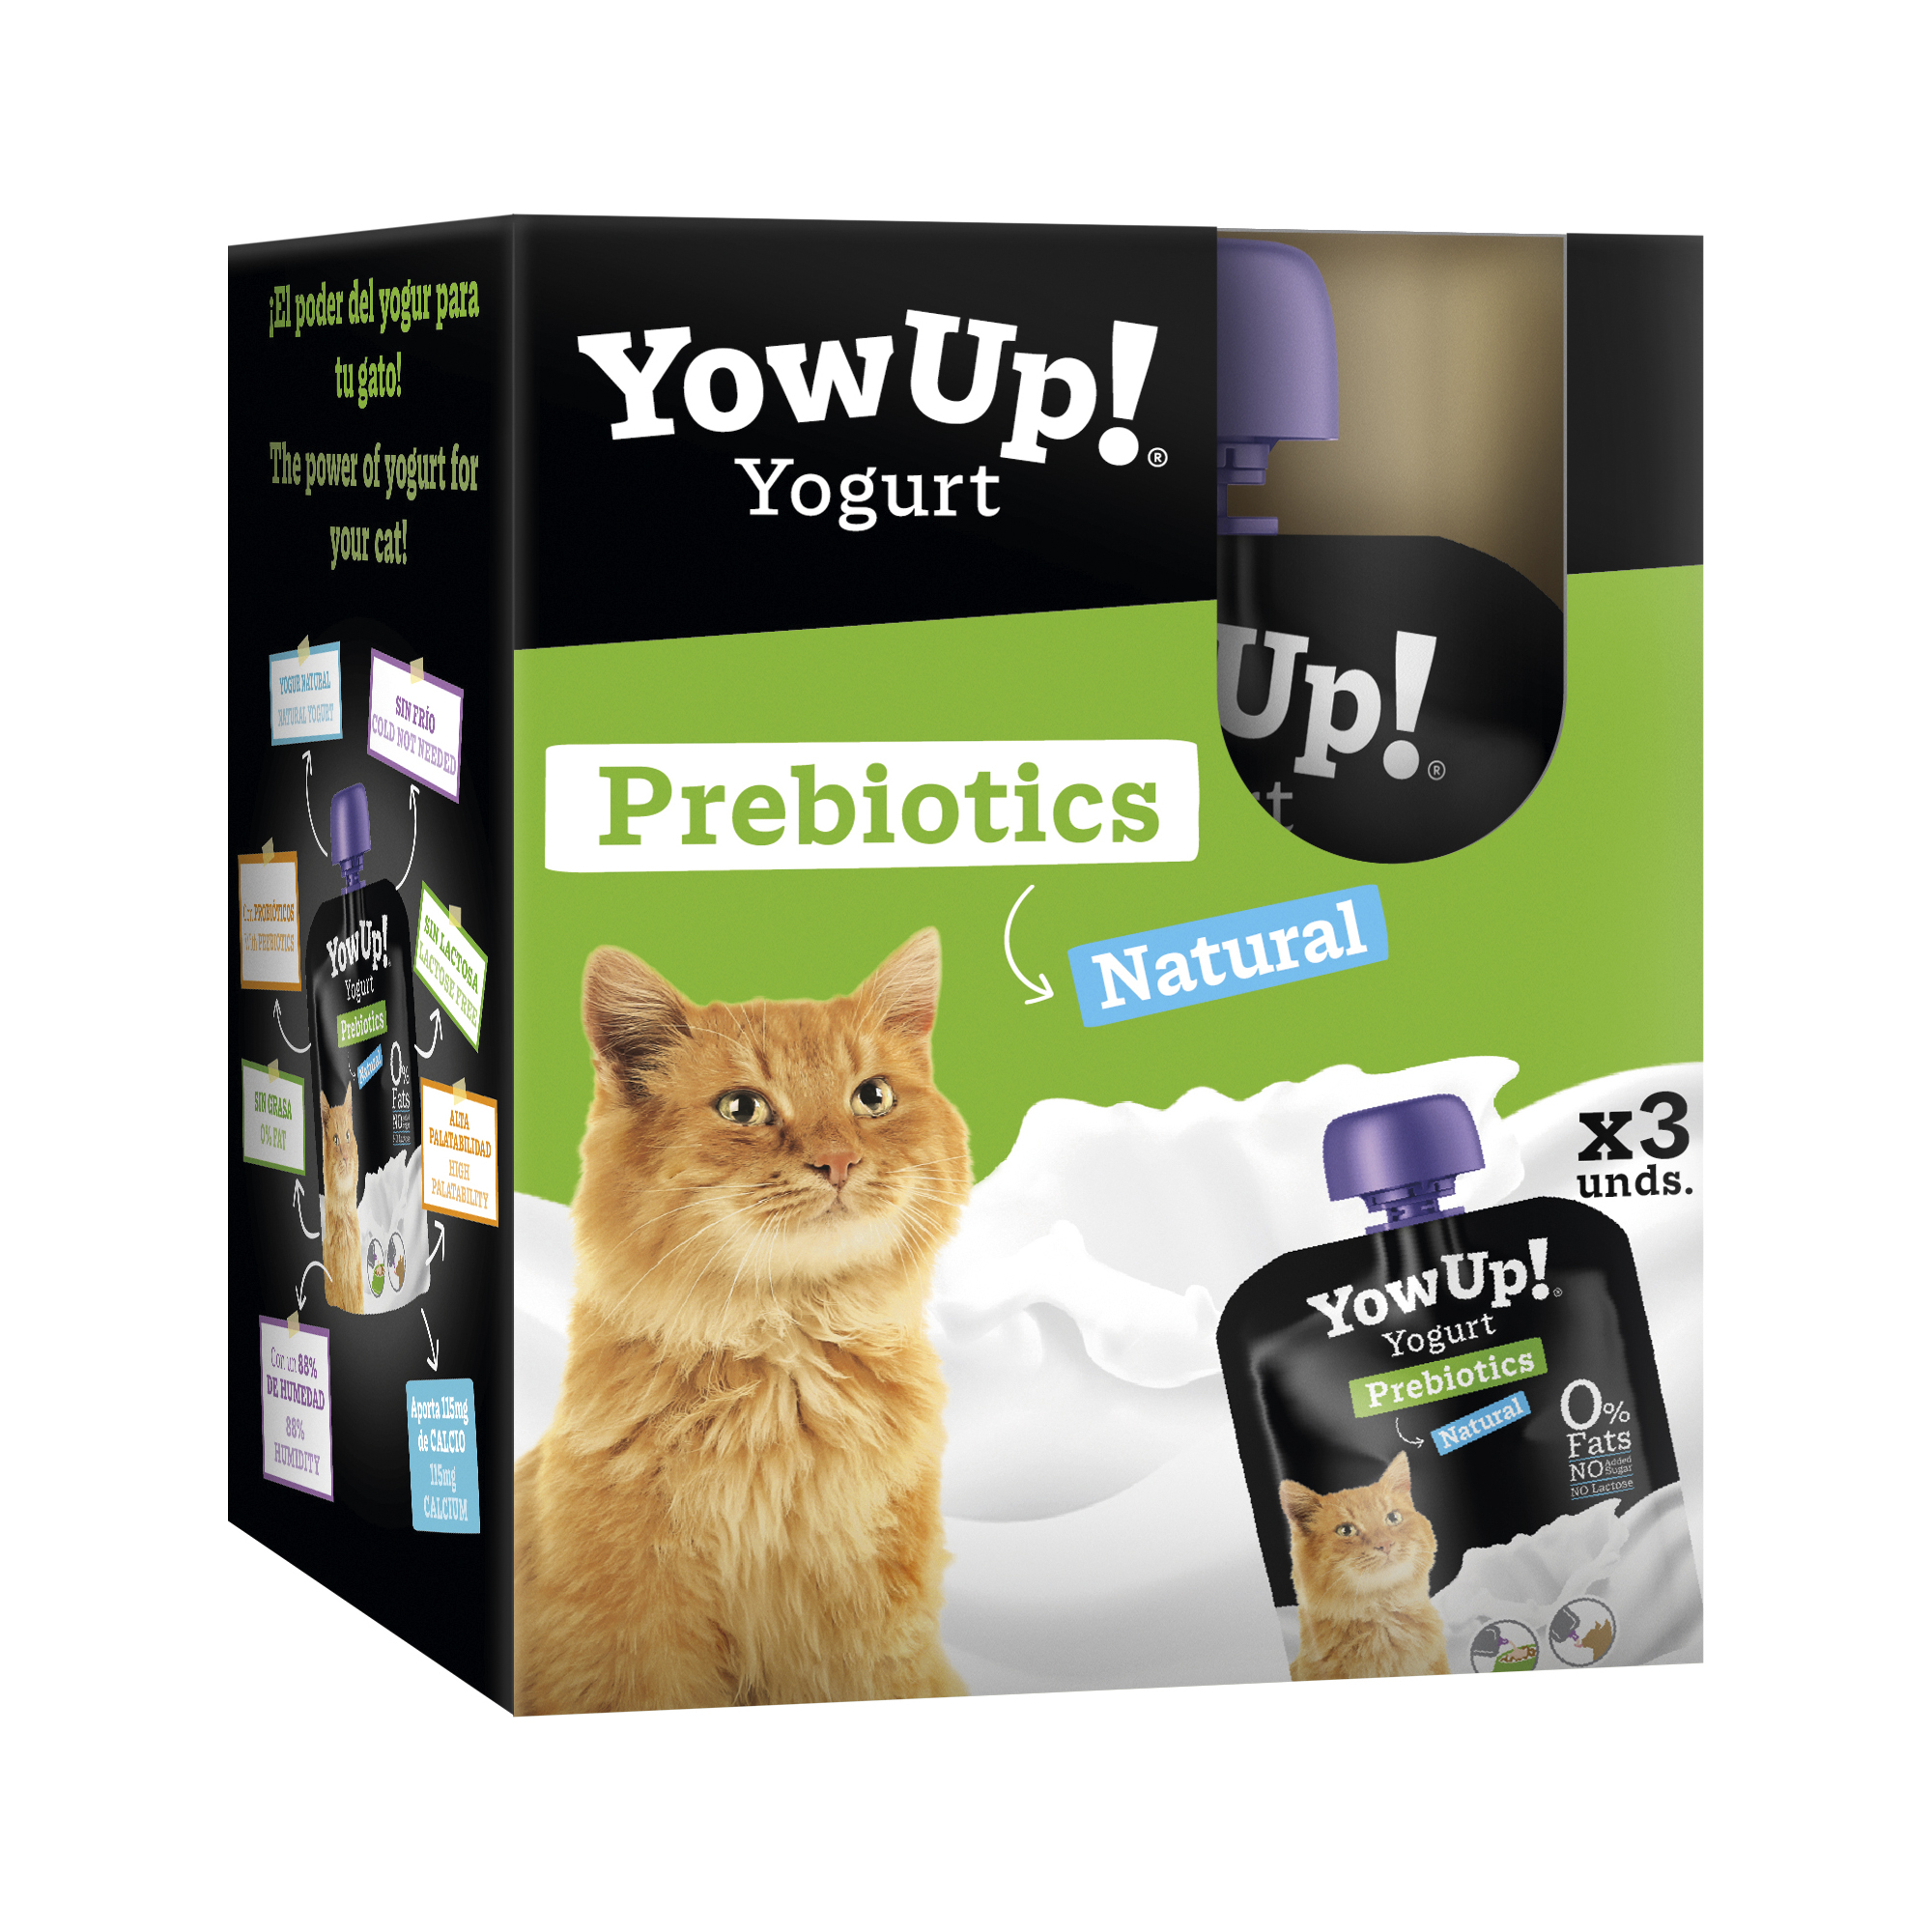 Yaourt prebiotics pour chat Yow Up !